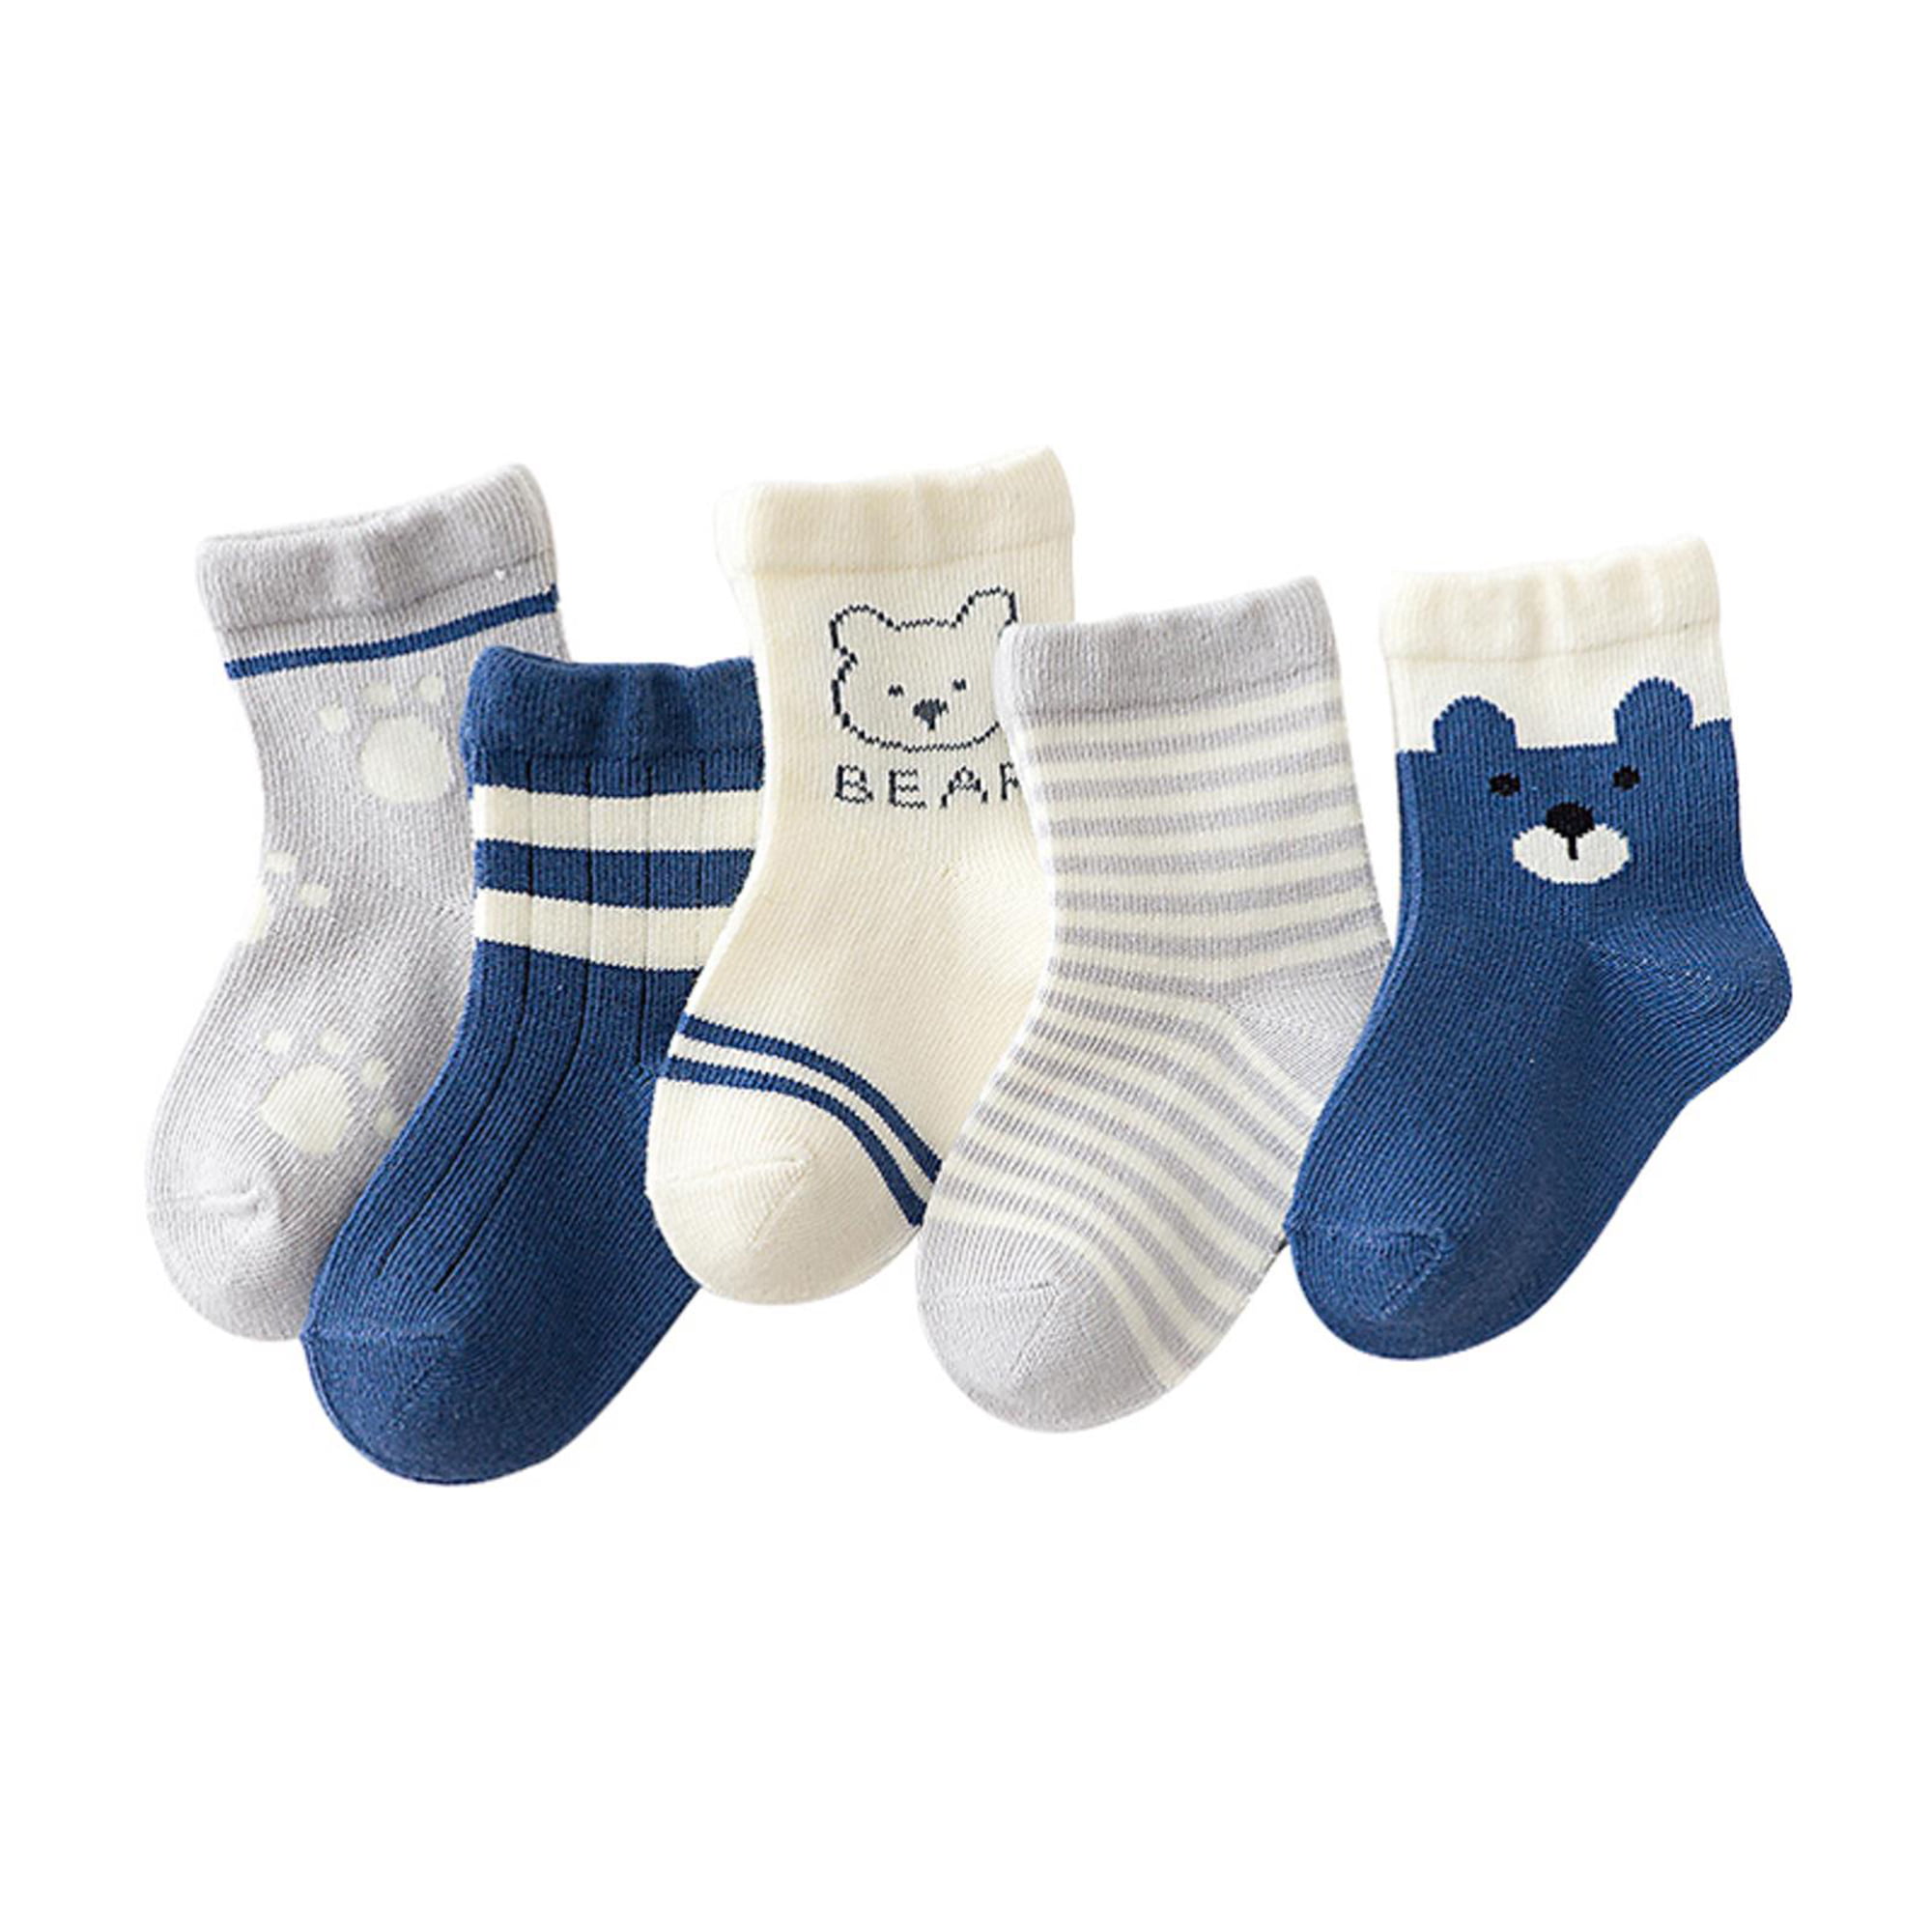 5 Pairs Baby Boy Girl Cotton Ankle Socks Newborn Infant Toddler Kids Soft Sock M 